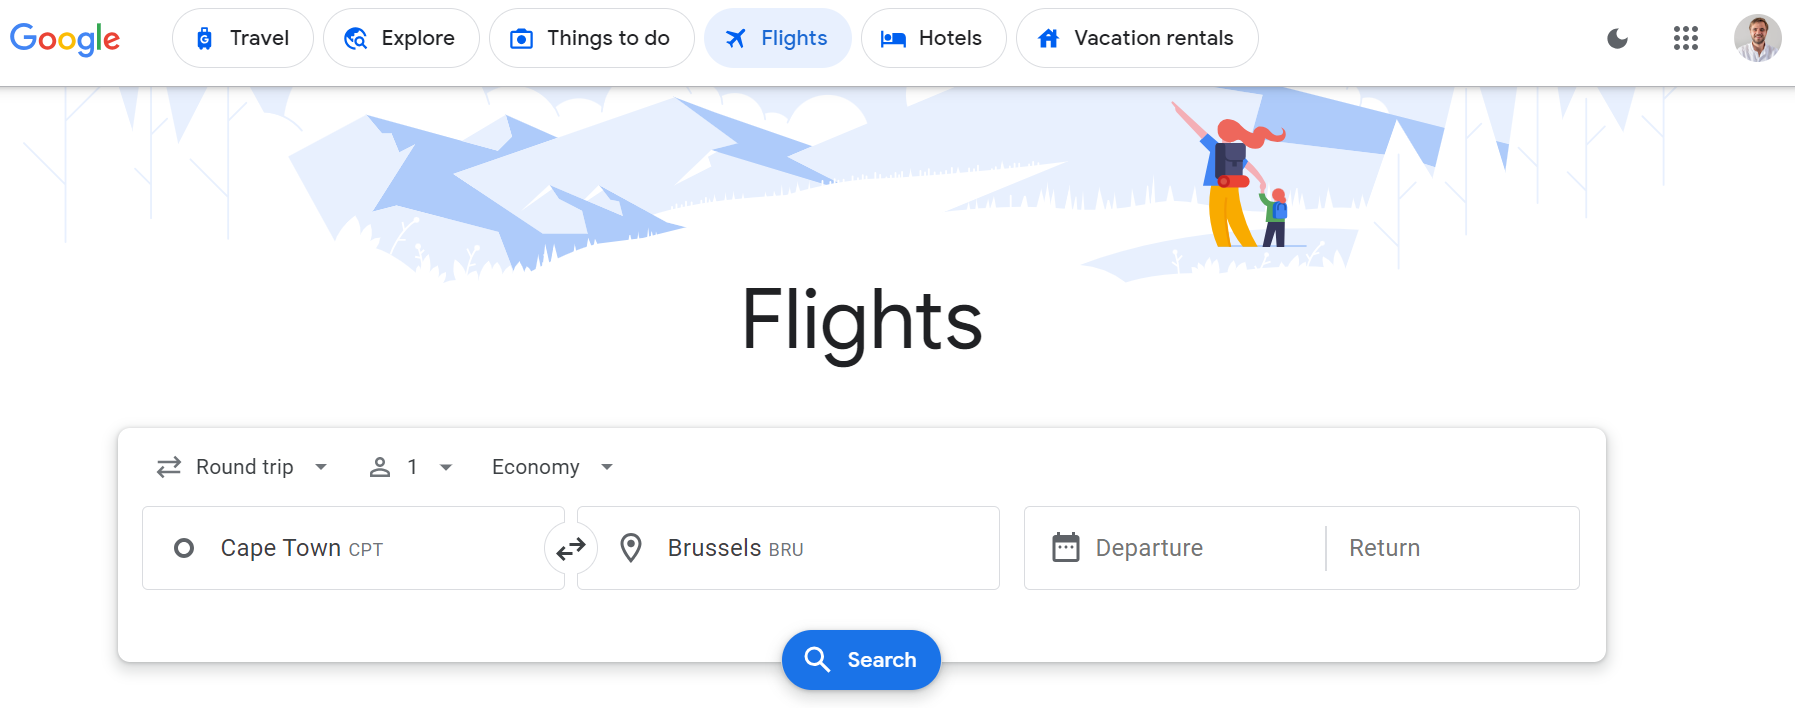 Google Flights landing page